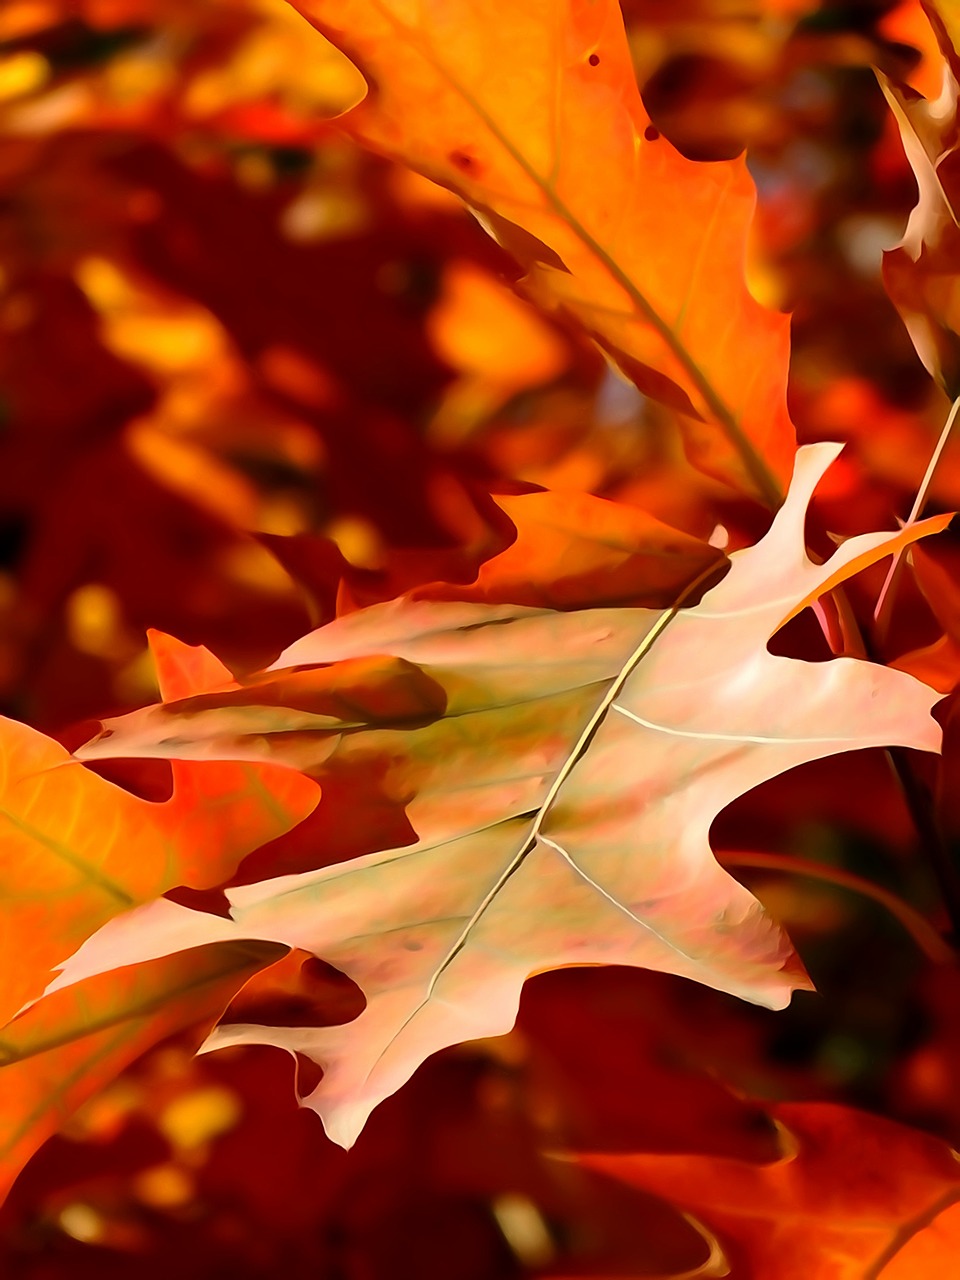 leaf autumn the decrease in free photo